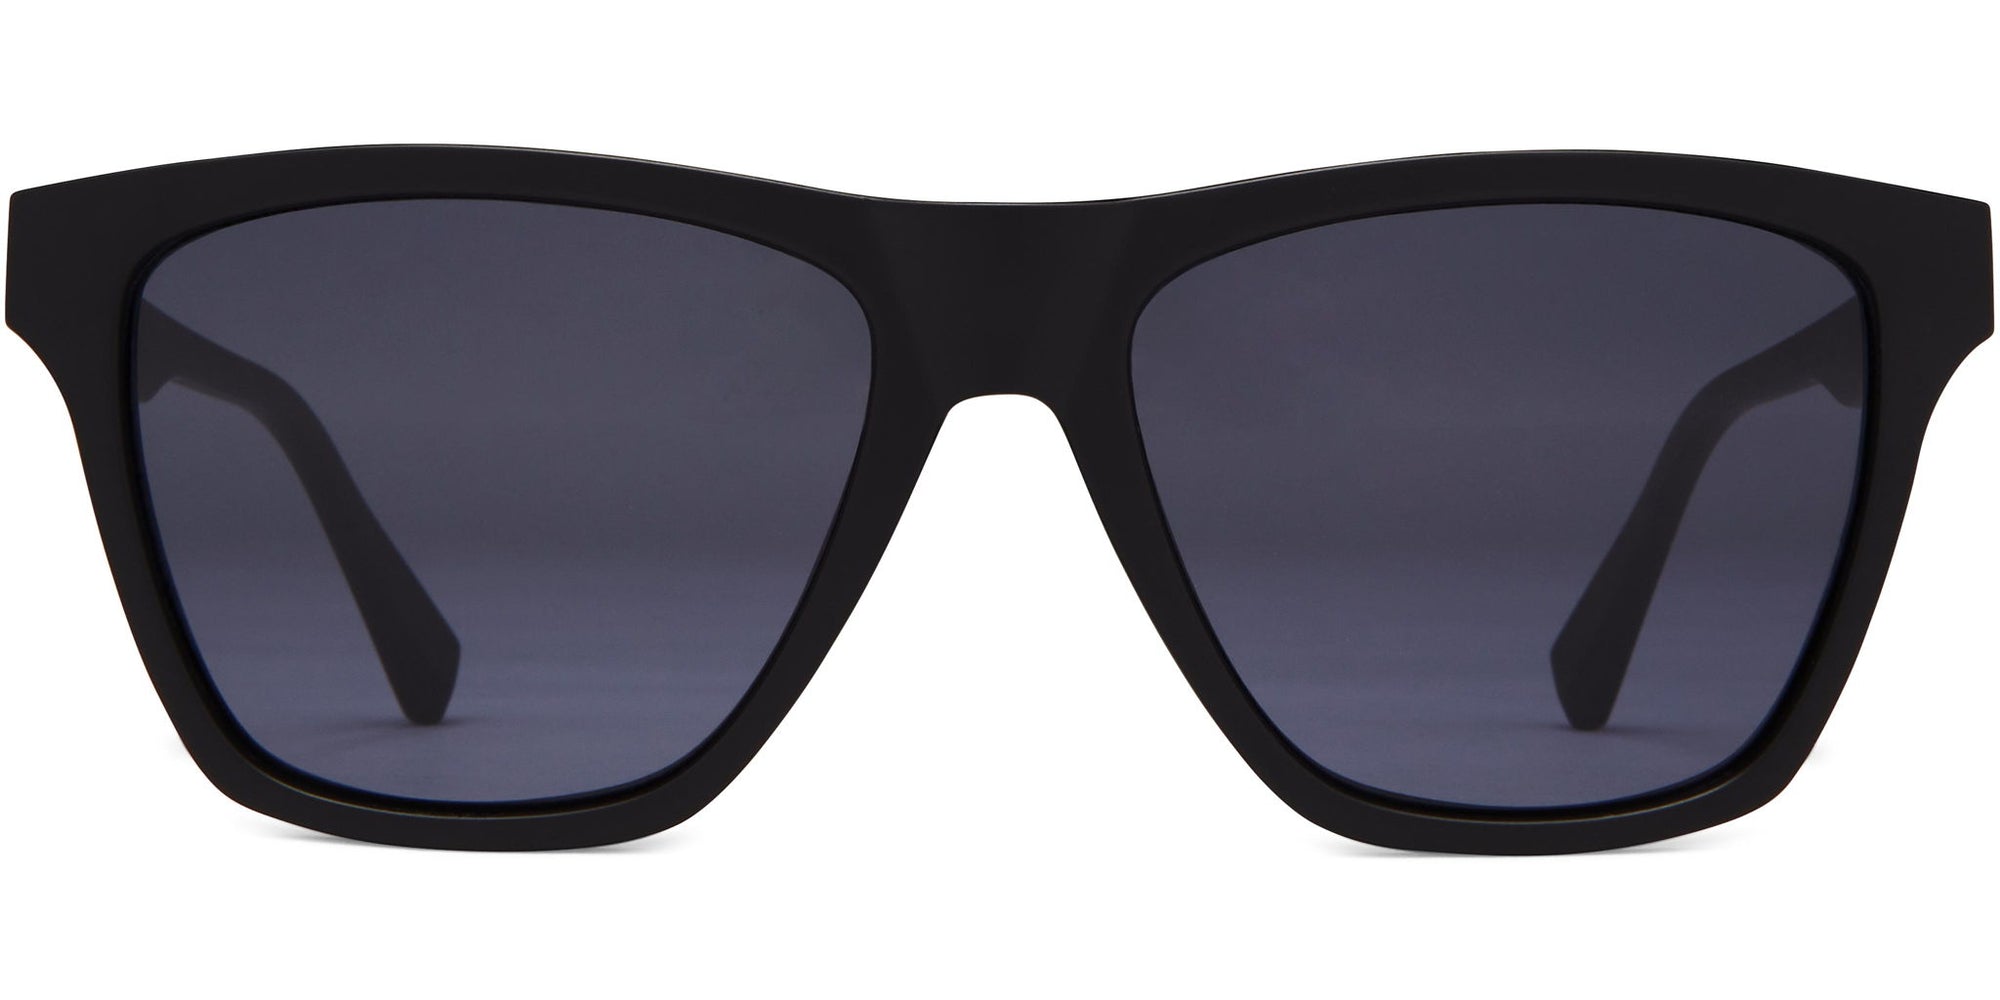 Andie Bi-Focal Sunglass - Black/Gray Lens / 1.25 - Reading Sunglasses